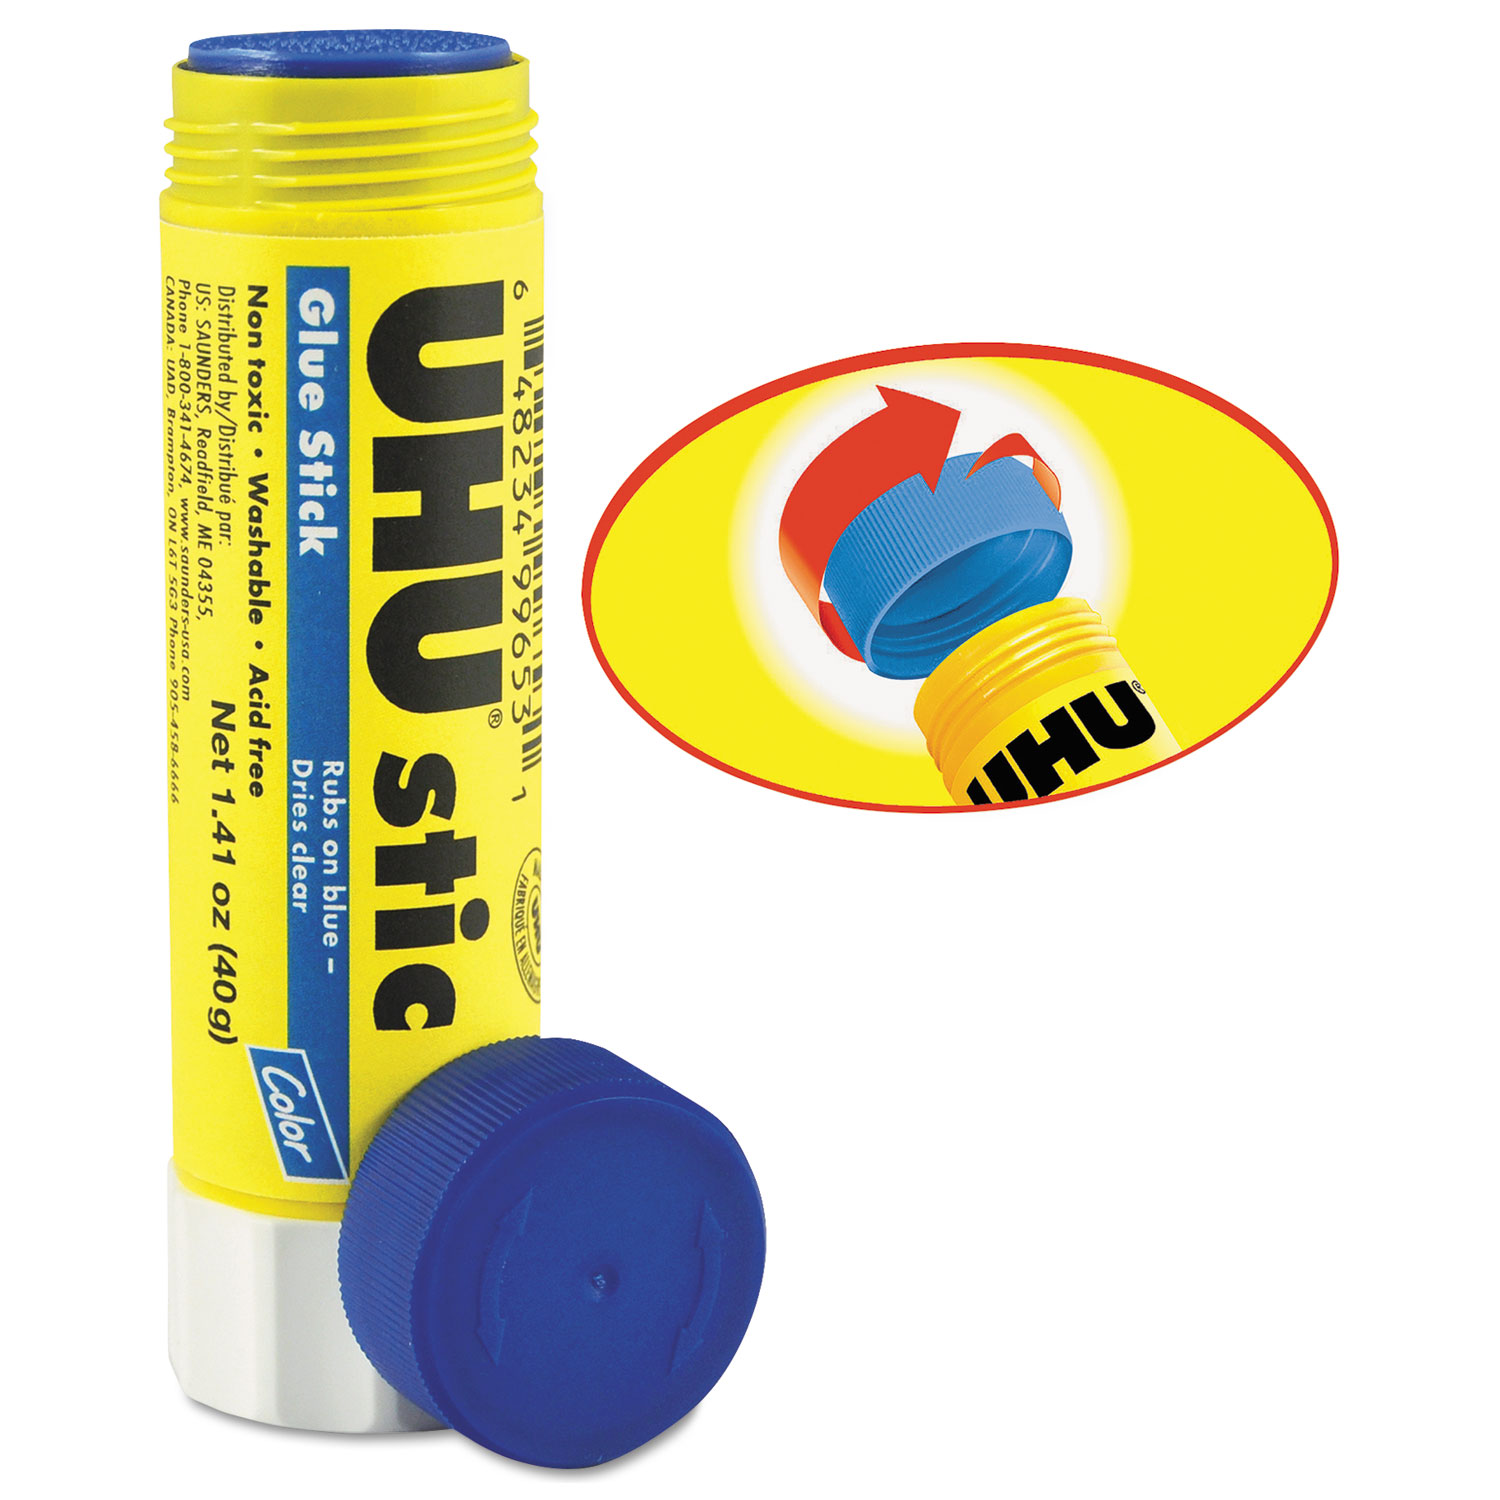 UHU Stic Permanent Blue Application Glue Stick, 1.41 oz, Stick